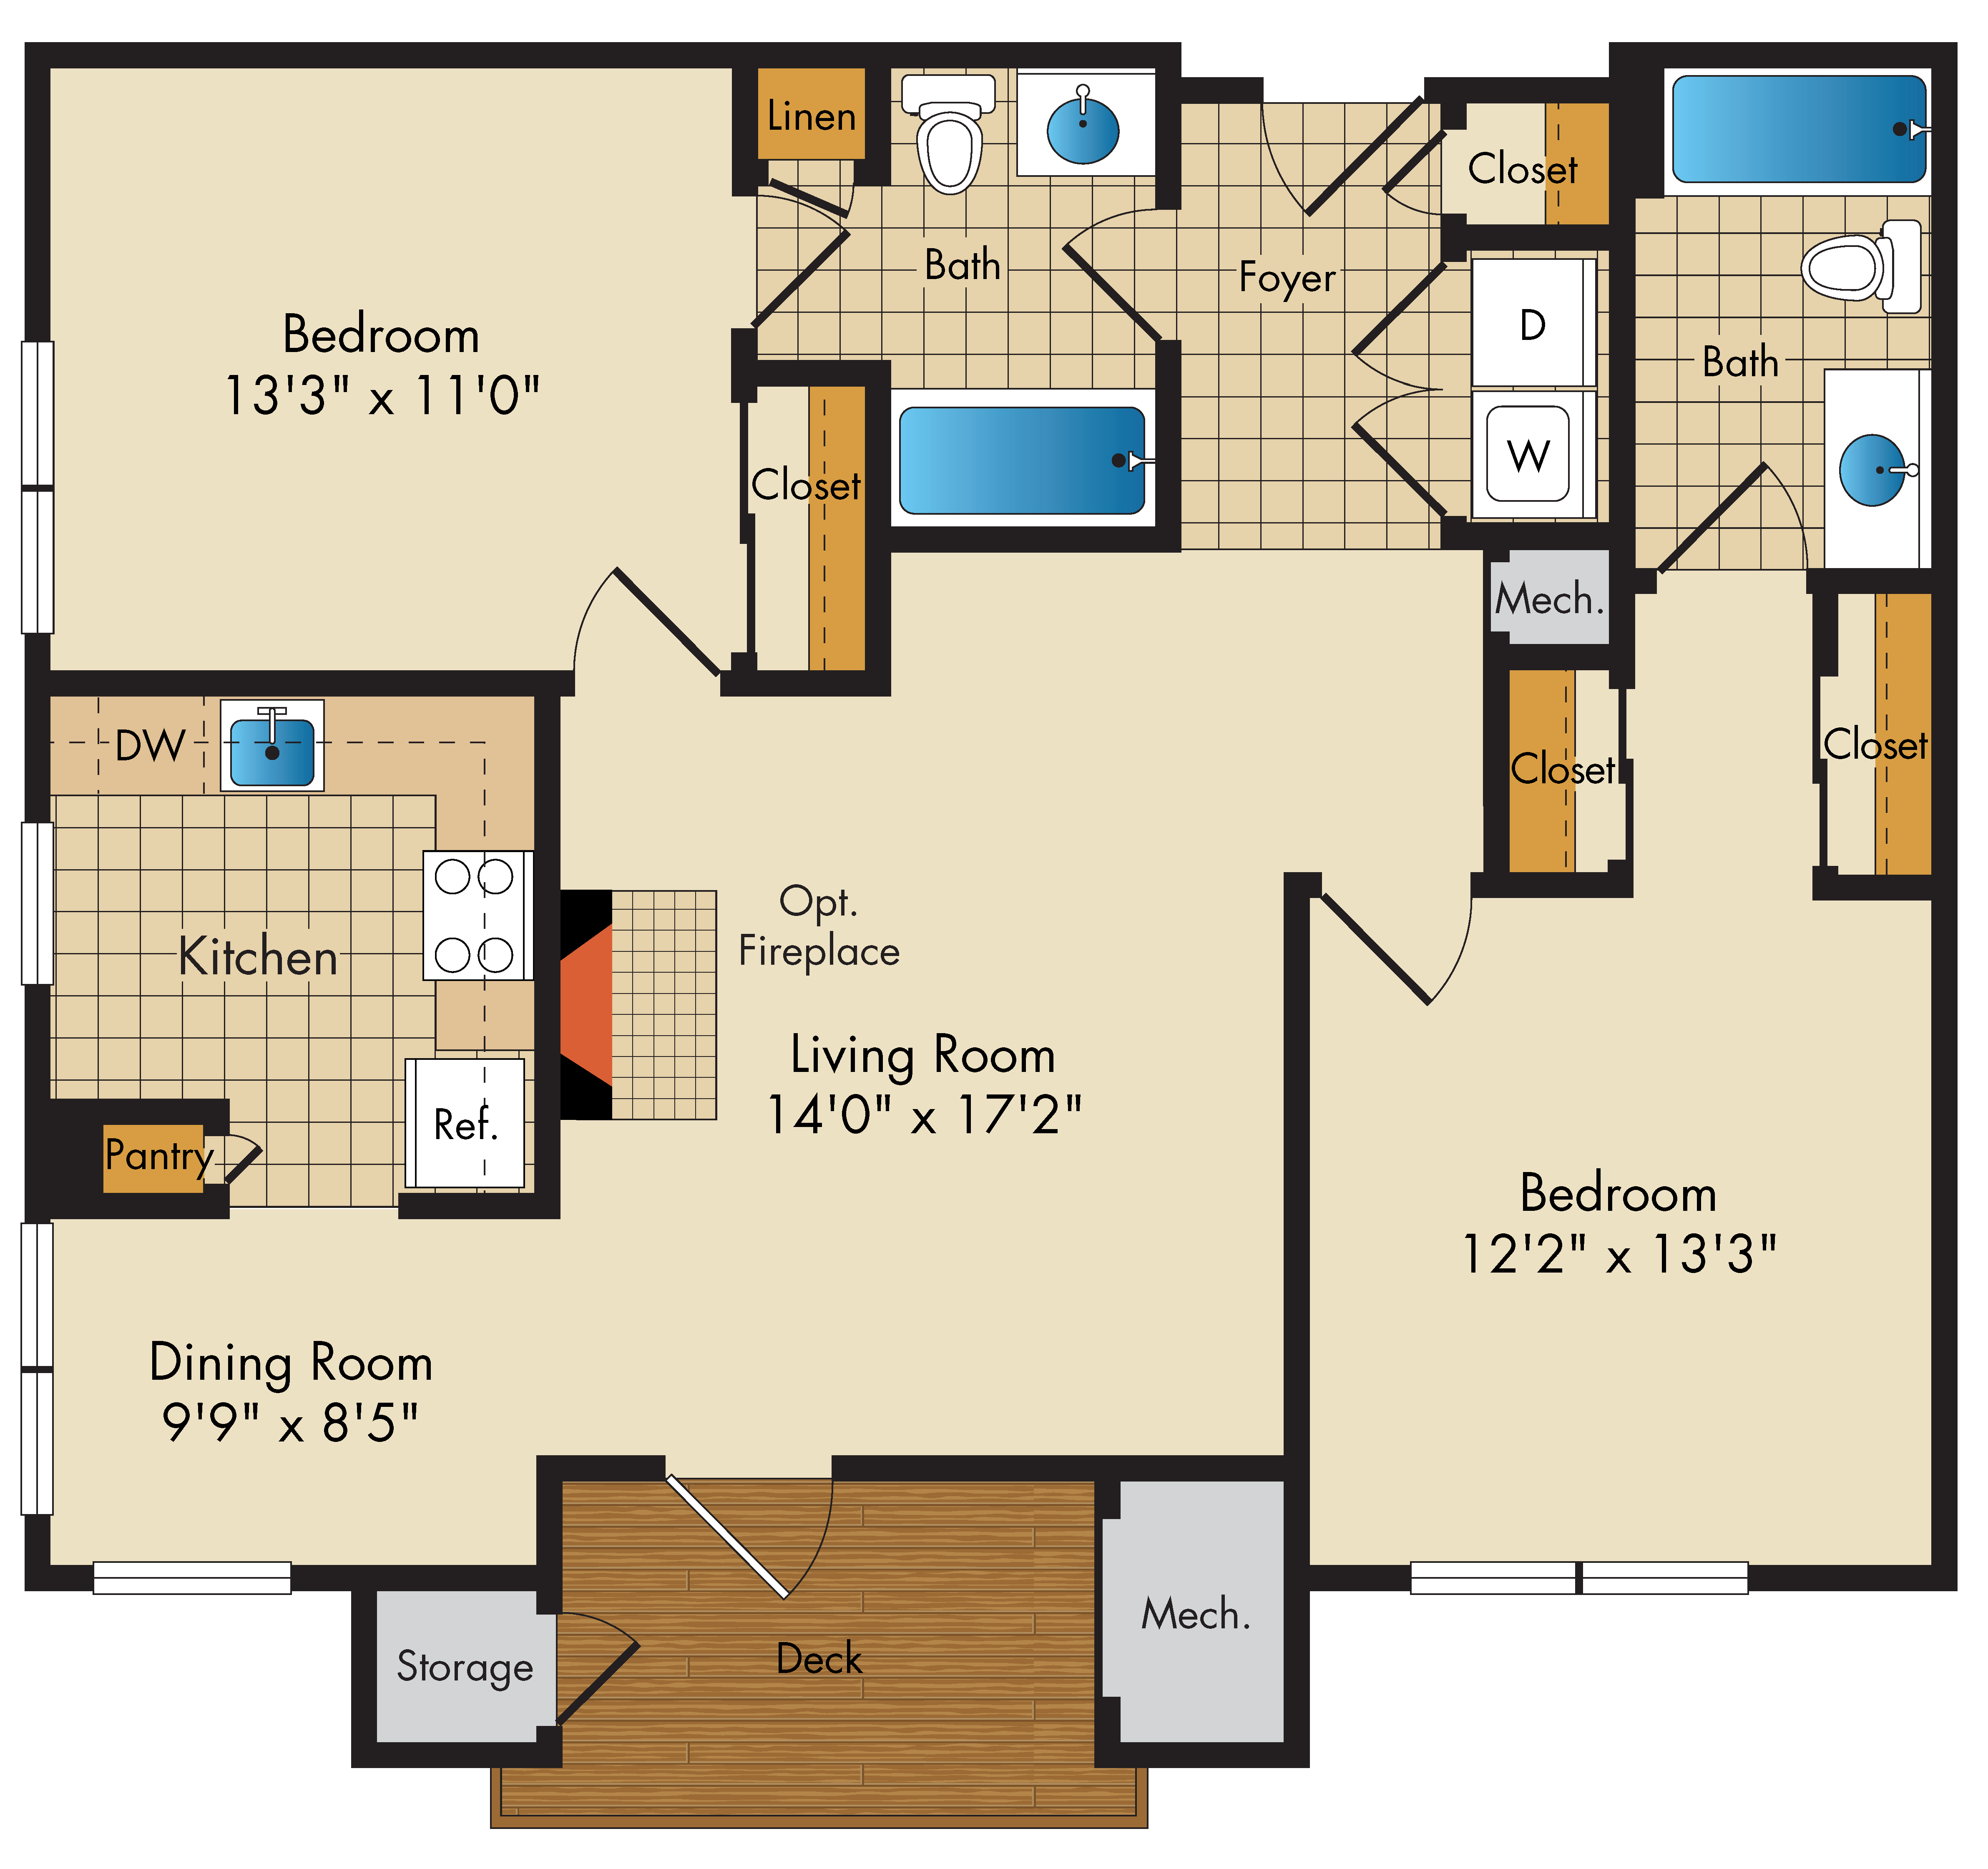 Apartment 334 floorplan